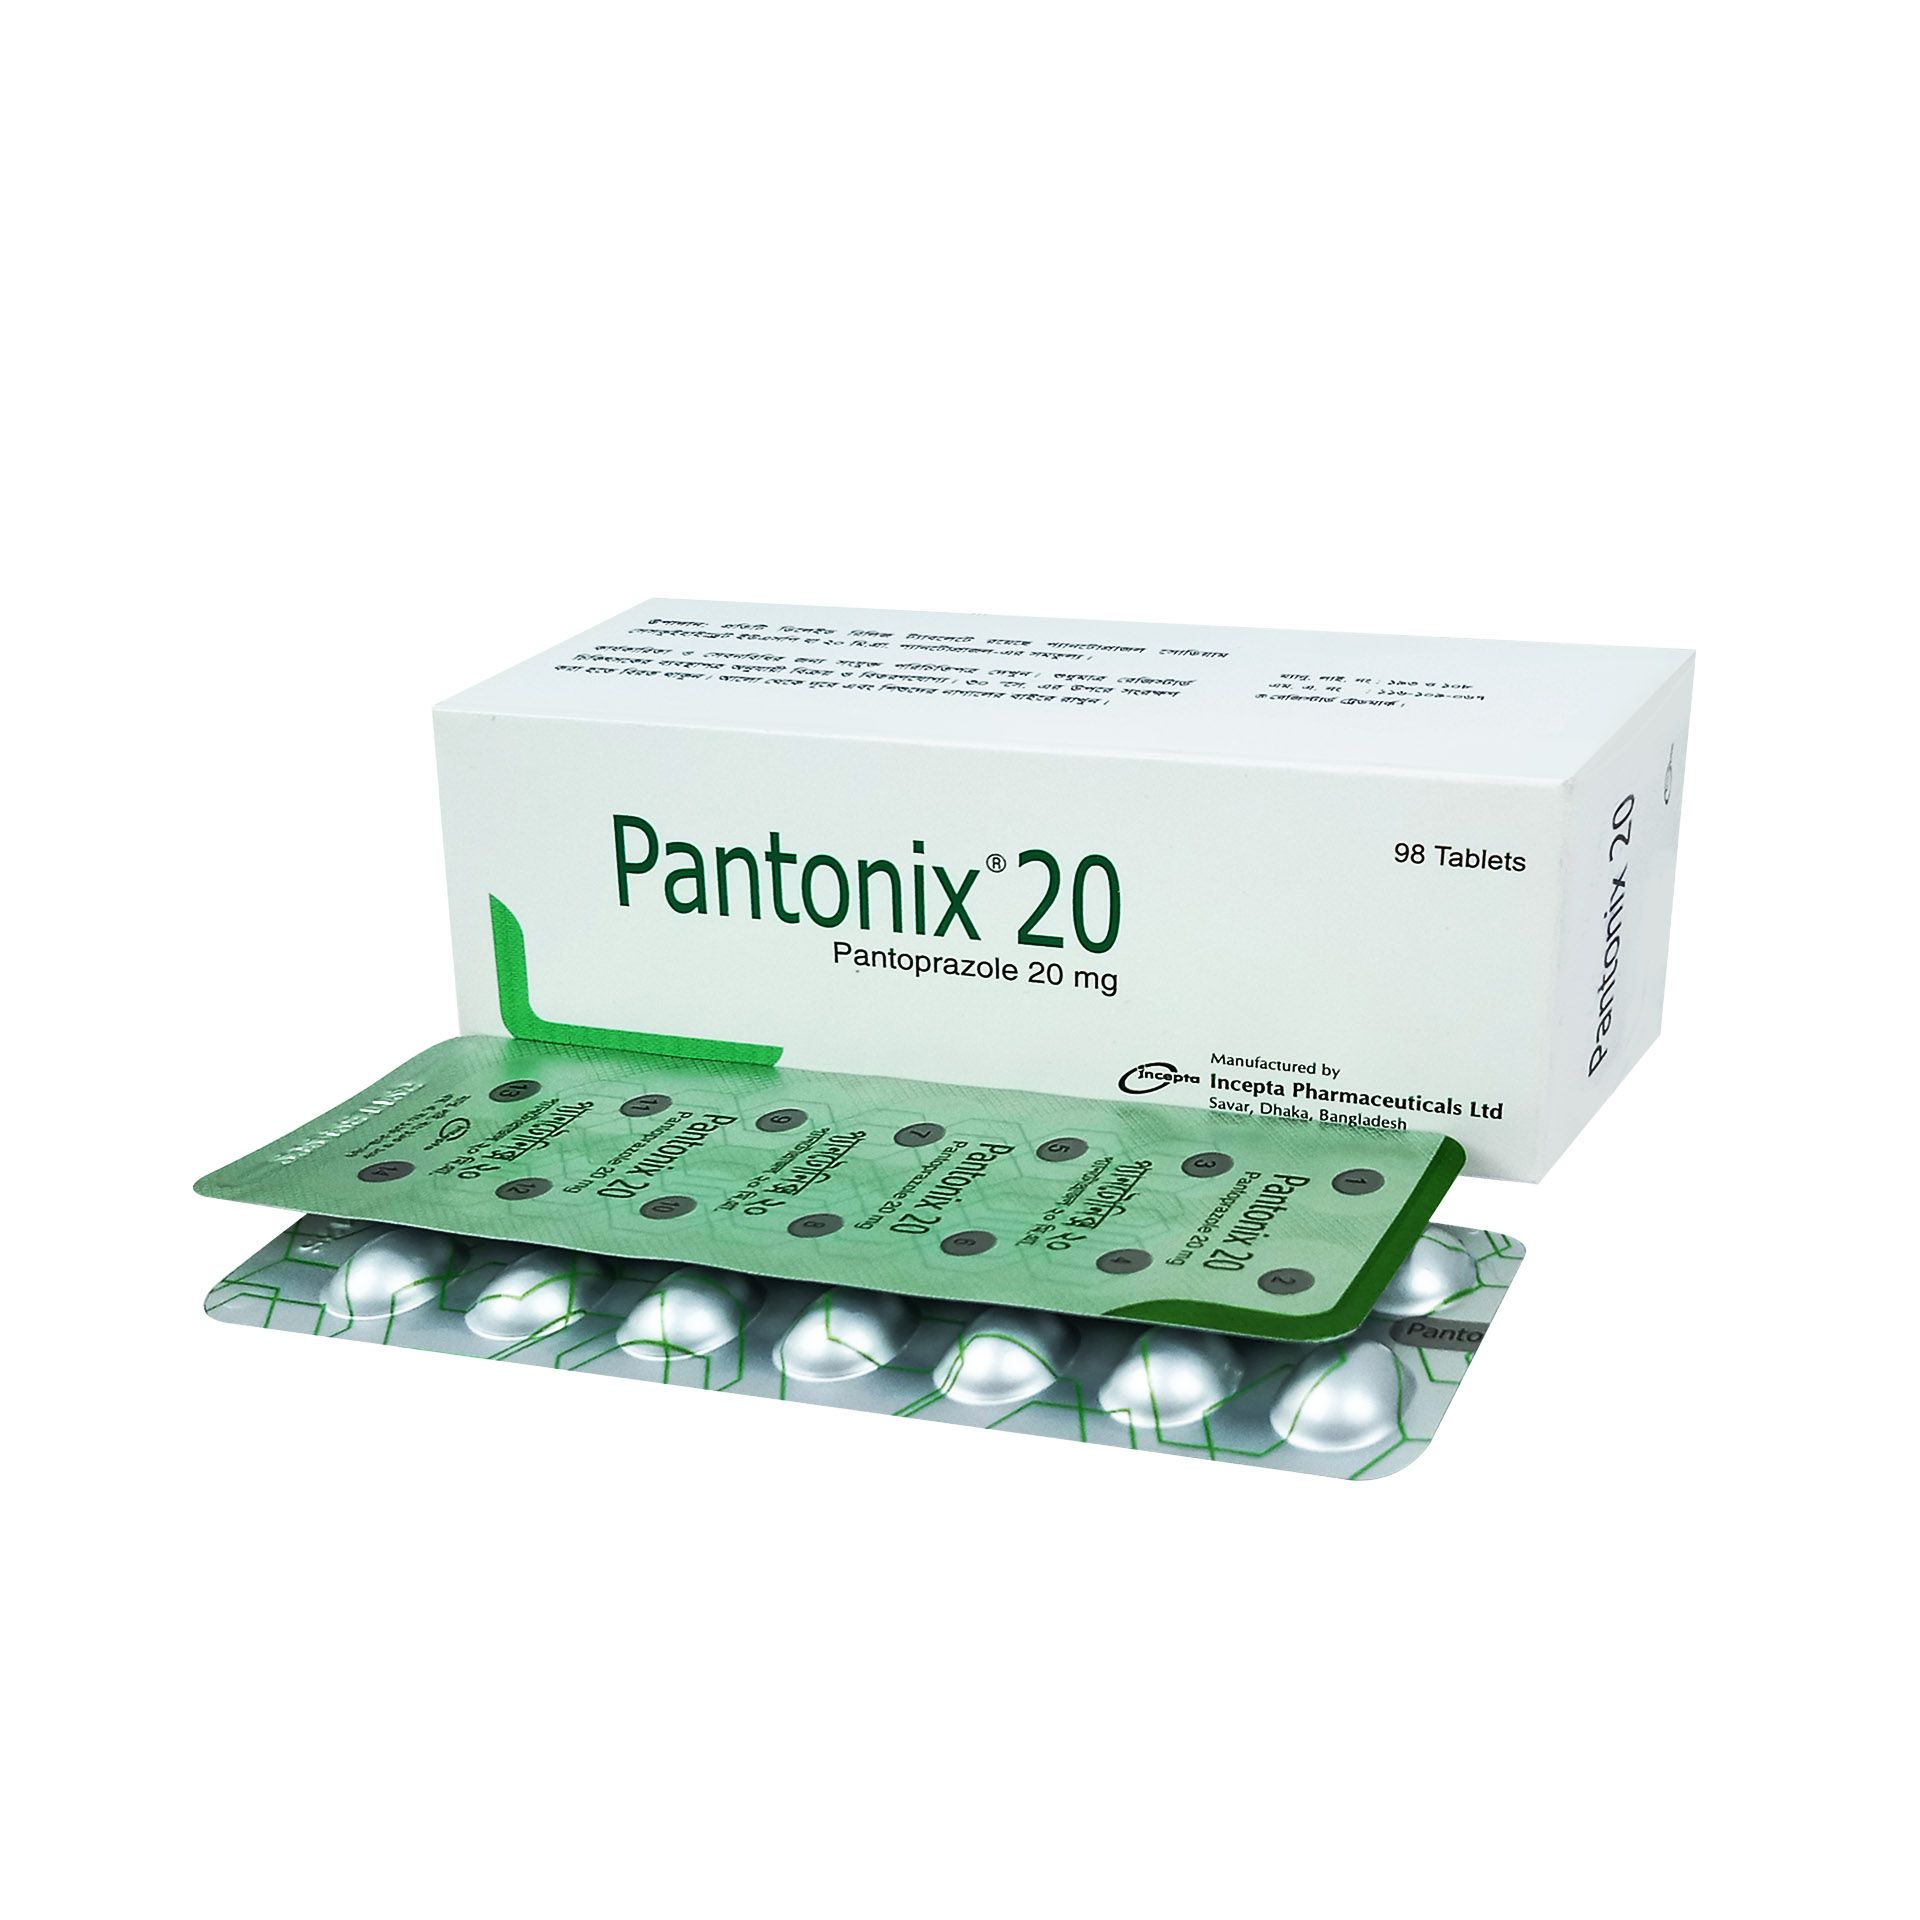 Pantonix 20